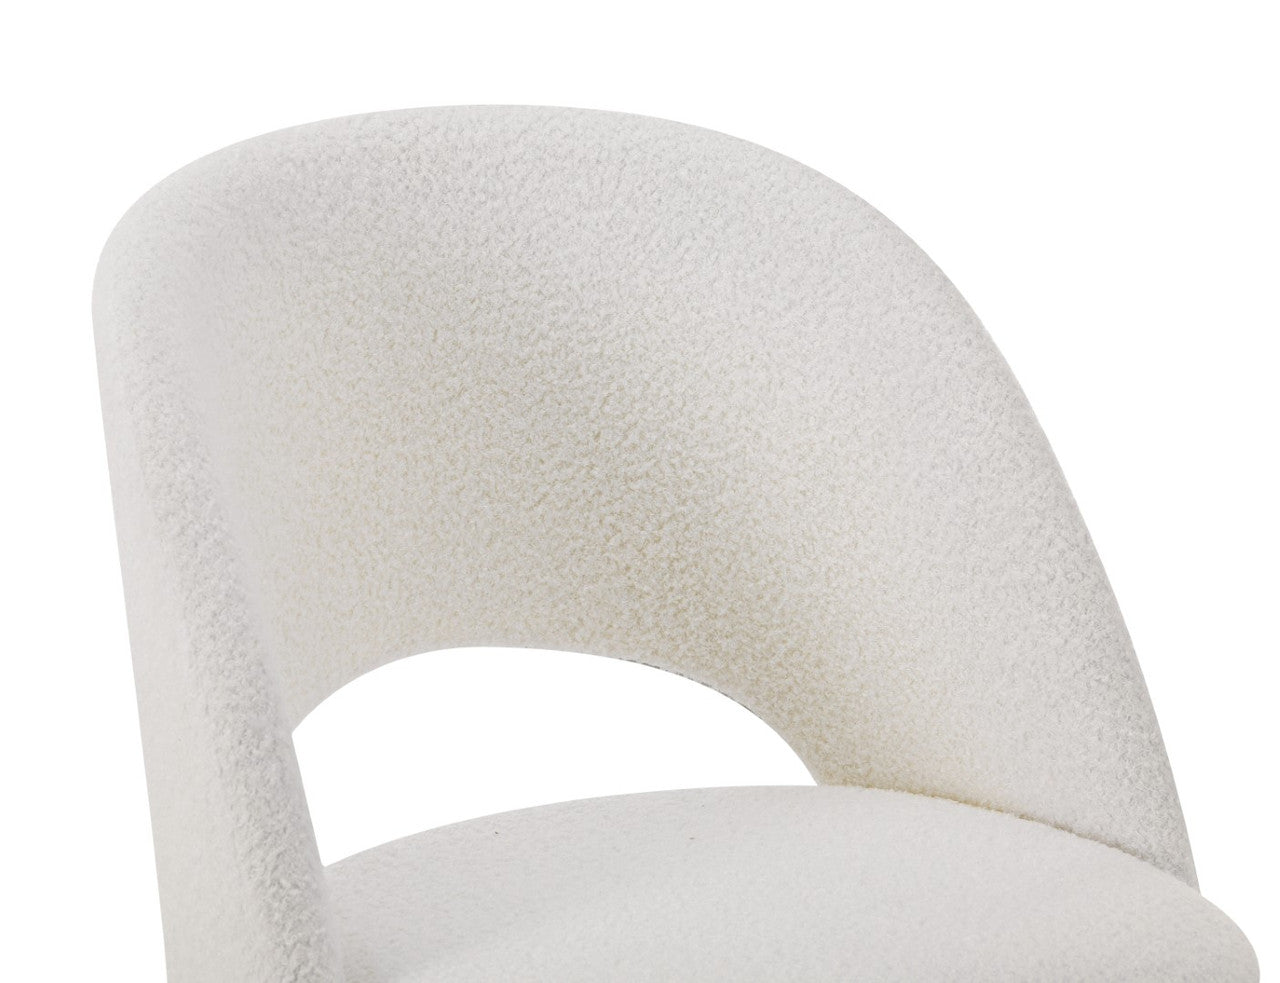 Shankar Furniture Atlanta Boucle White Dining Chairs